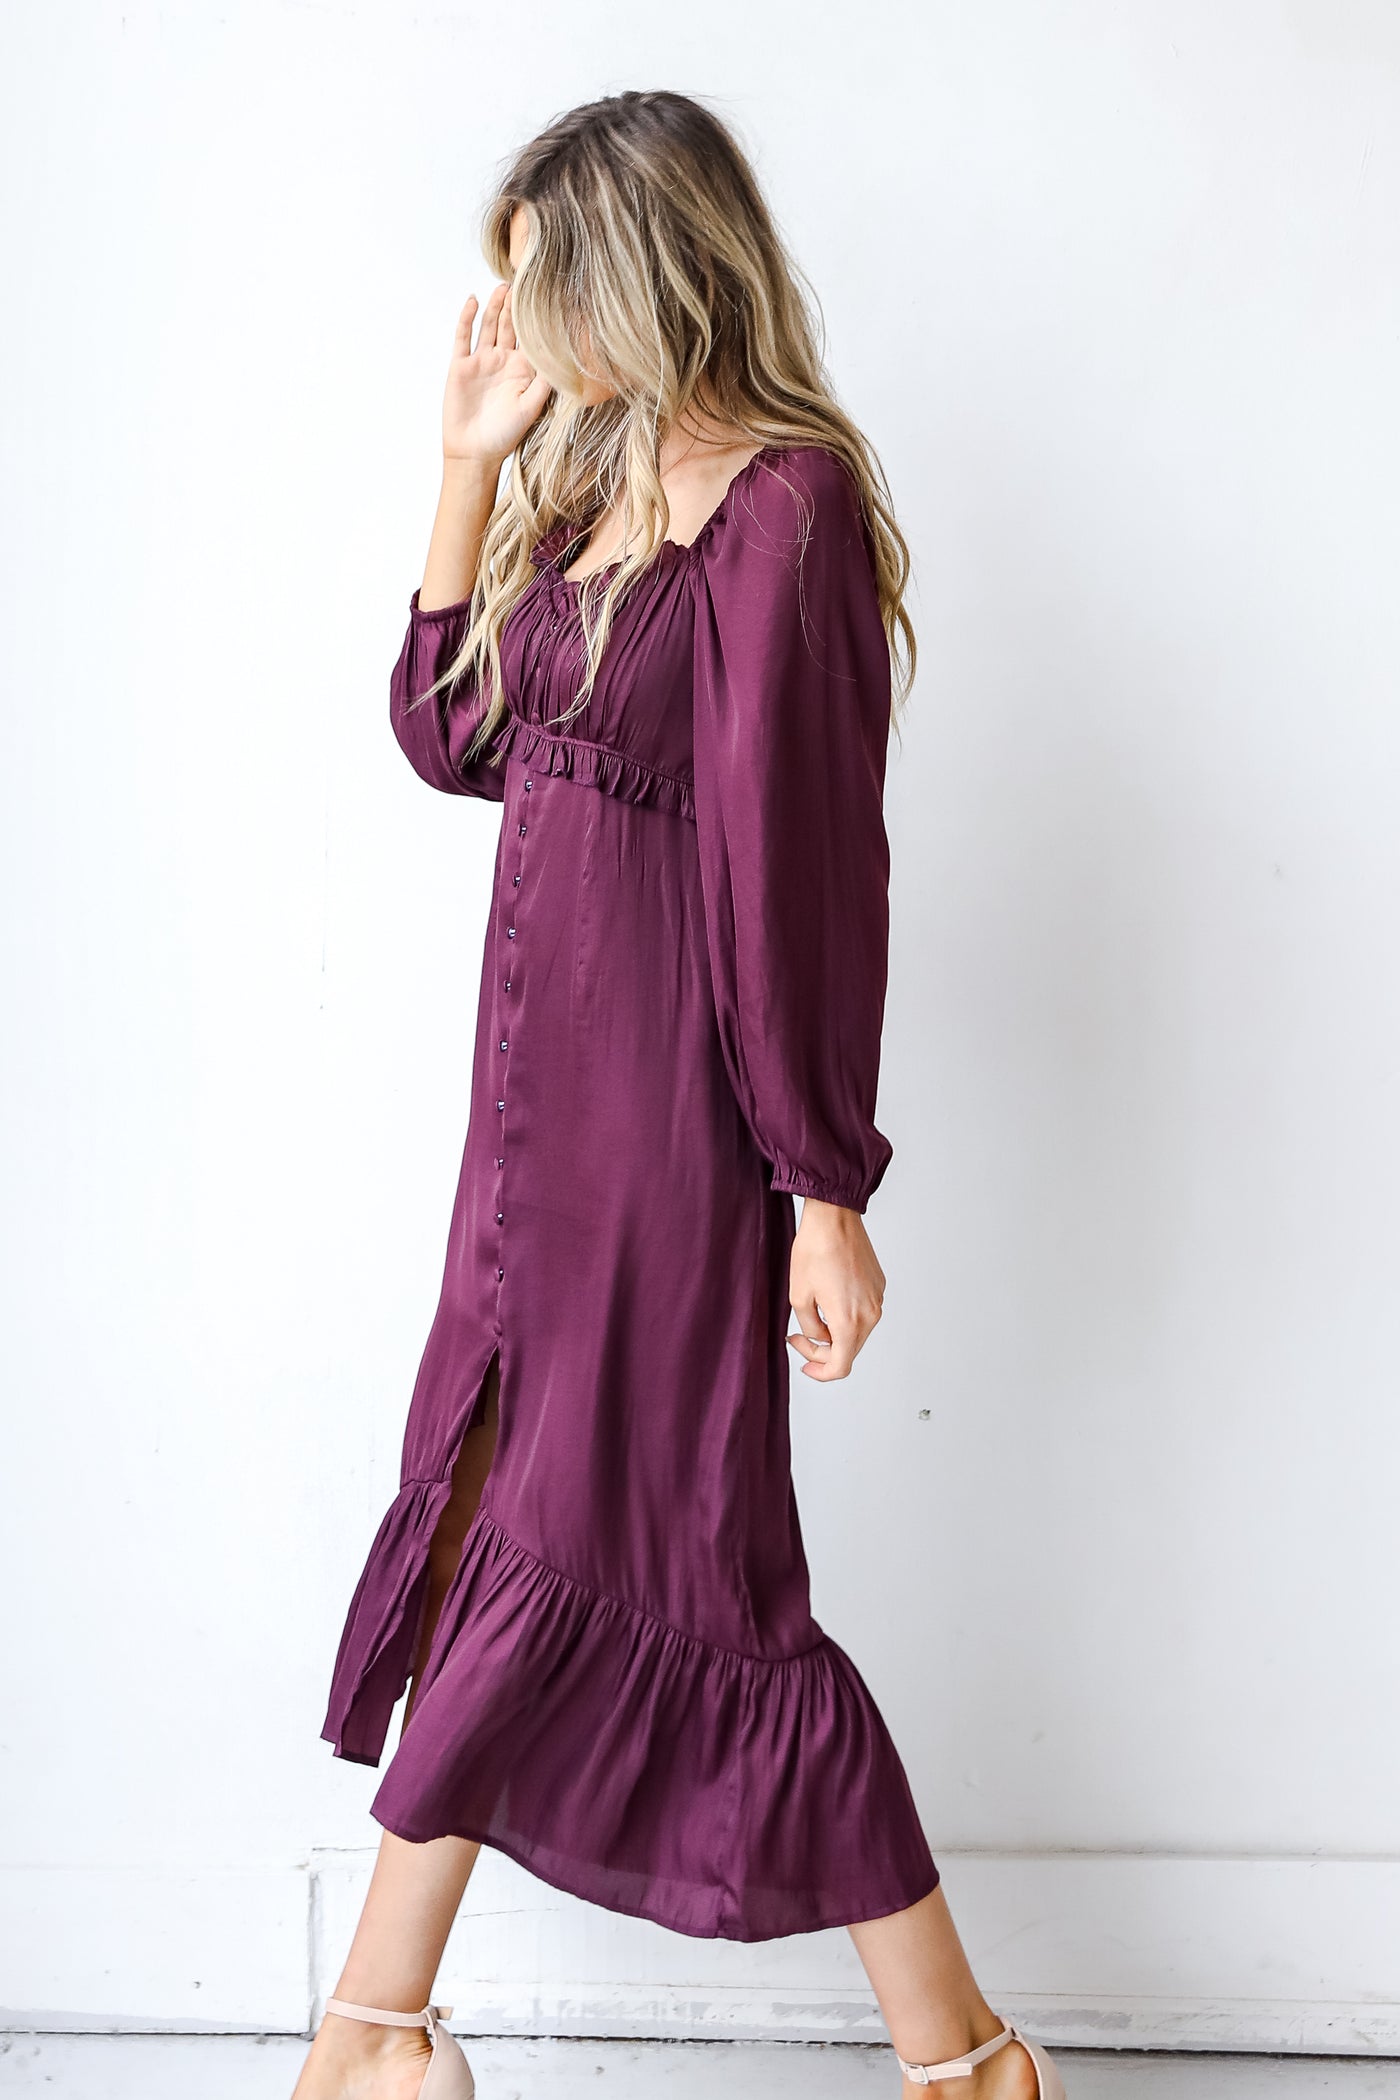 Midi Dress in burgundy side view